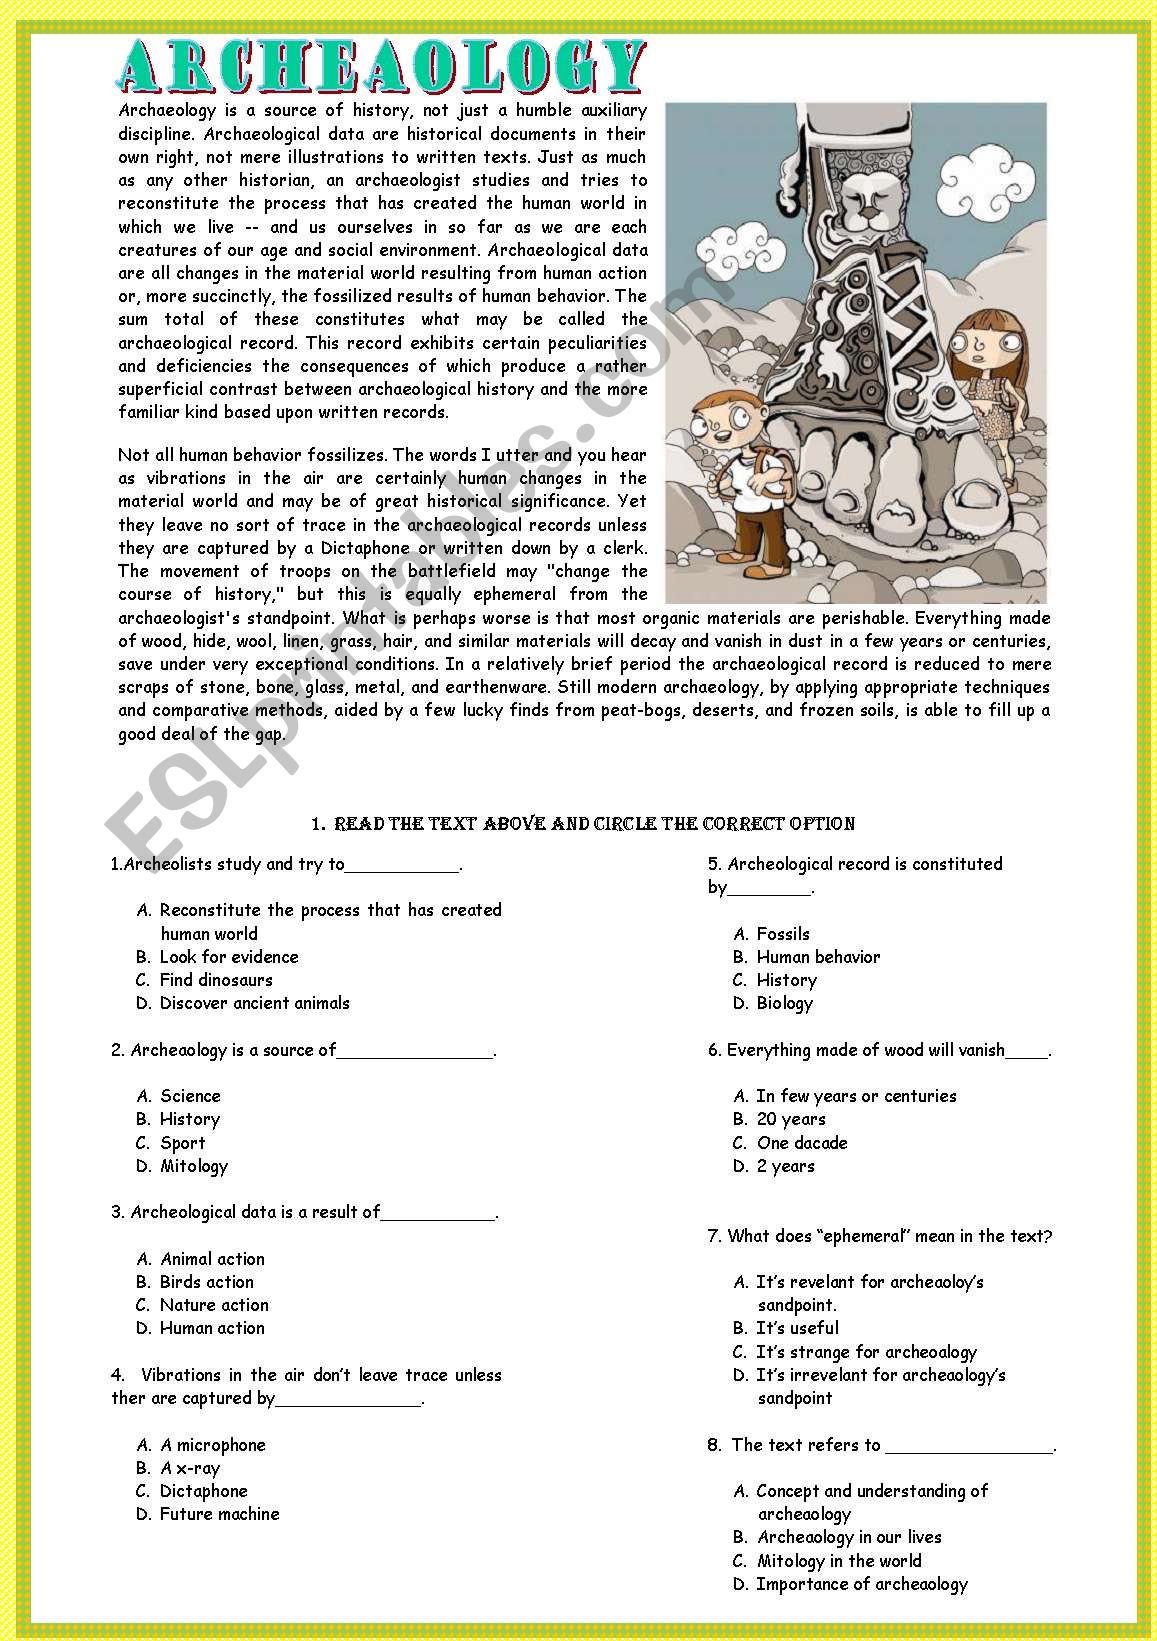 Reading-archeaology worksheet